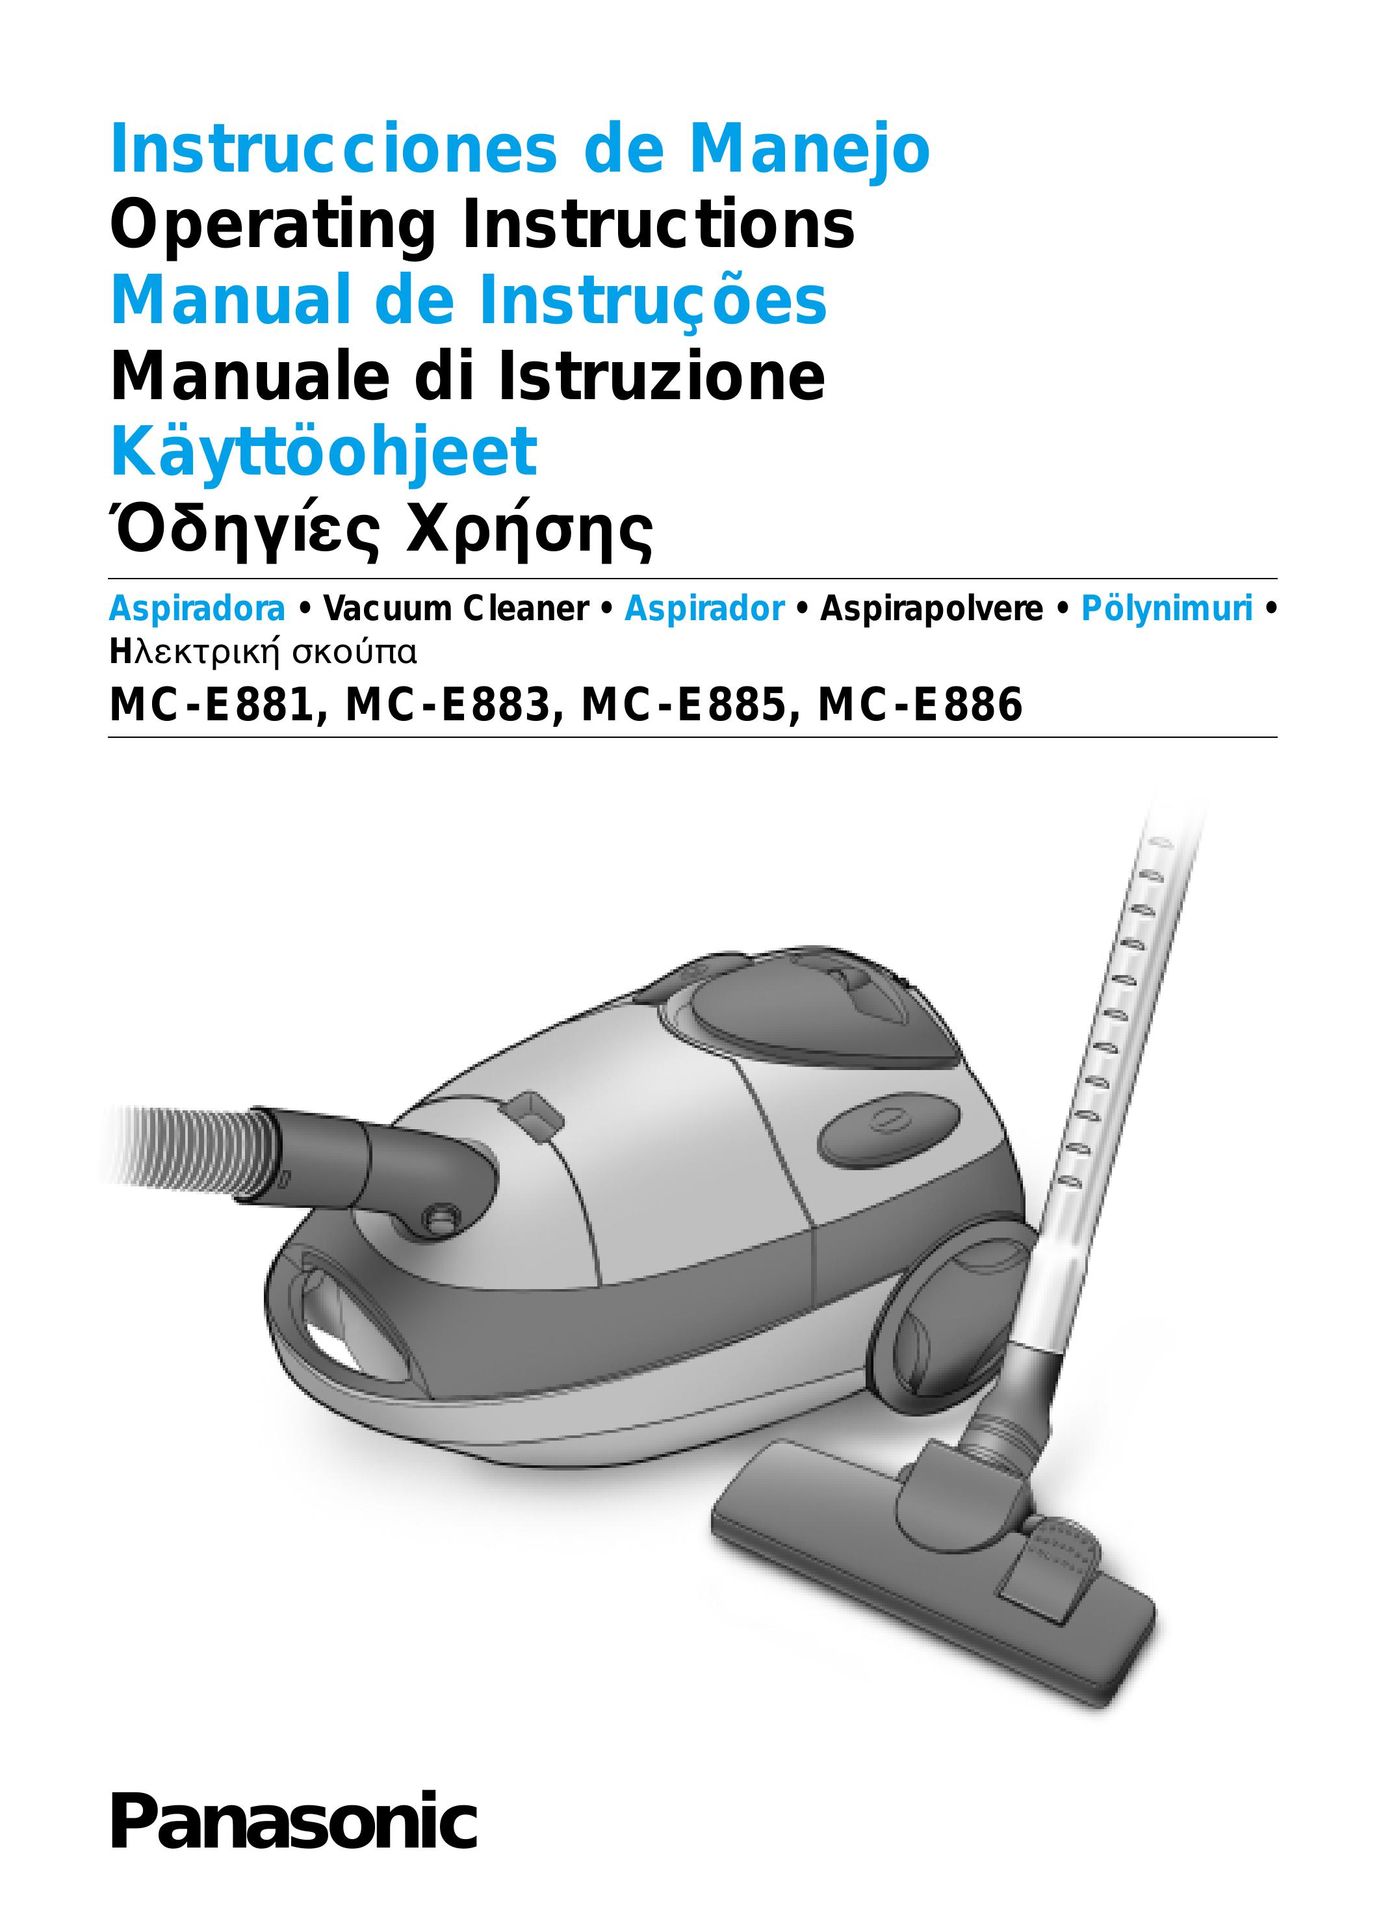 Panasonic MC-E886 Vacuum Cleaner User Manual